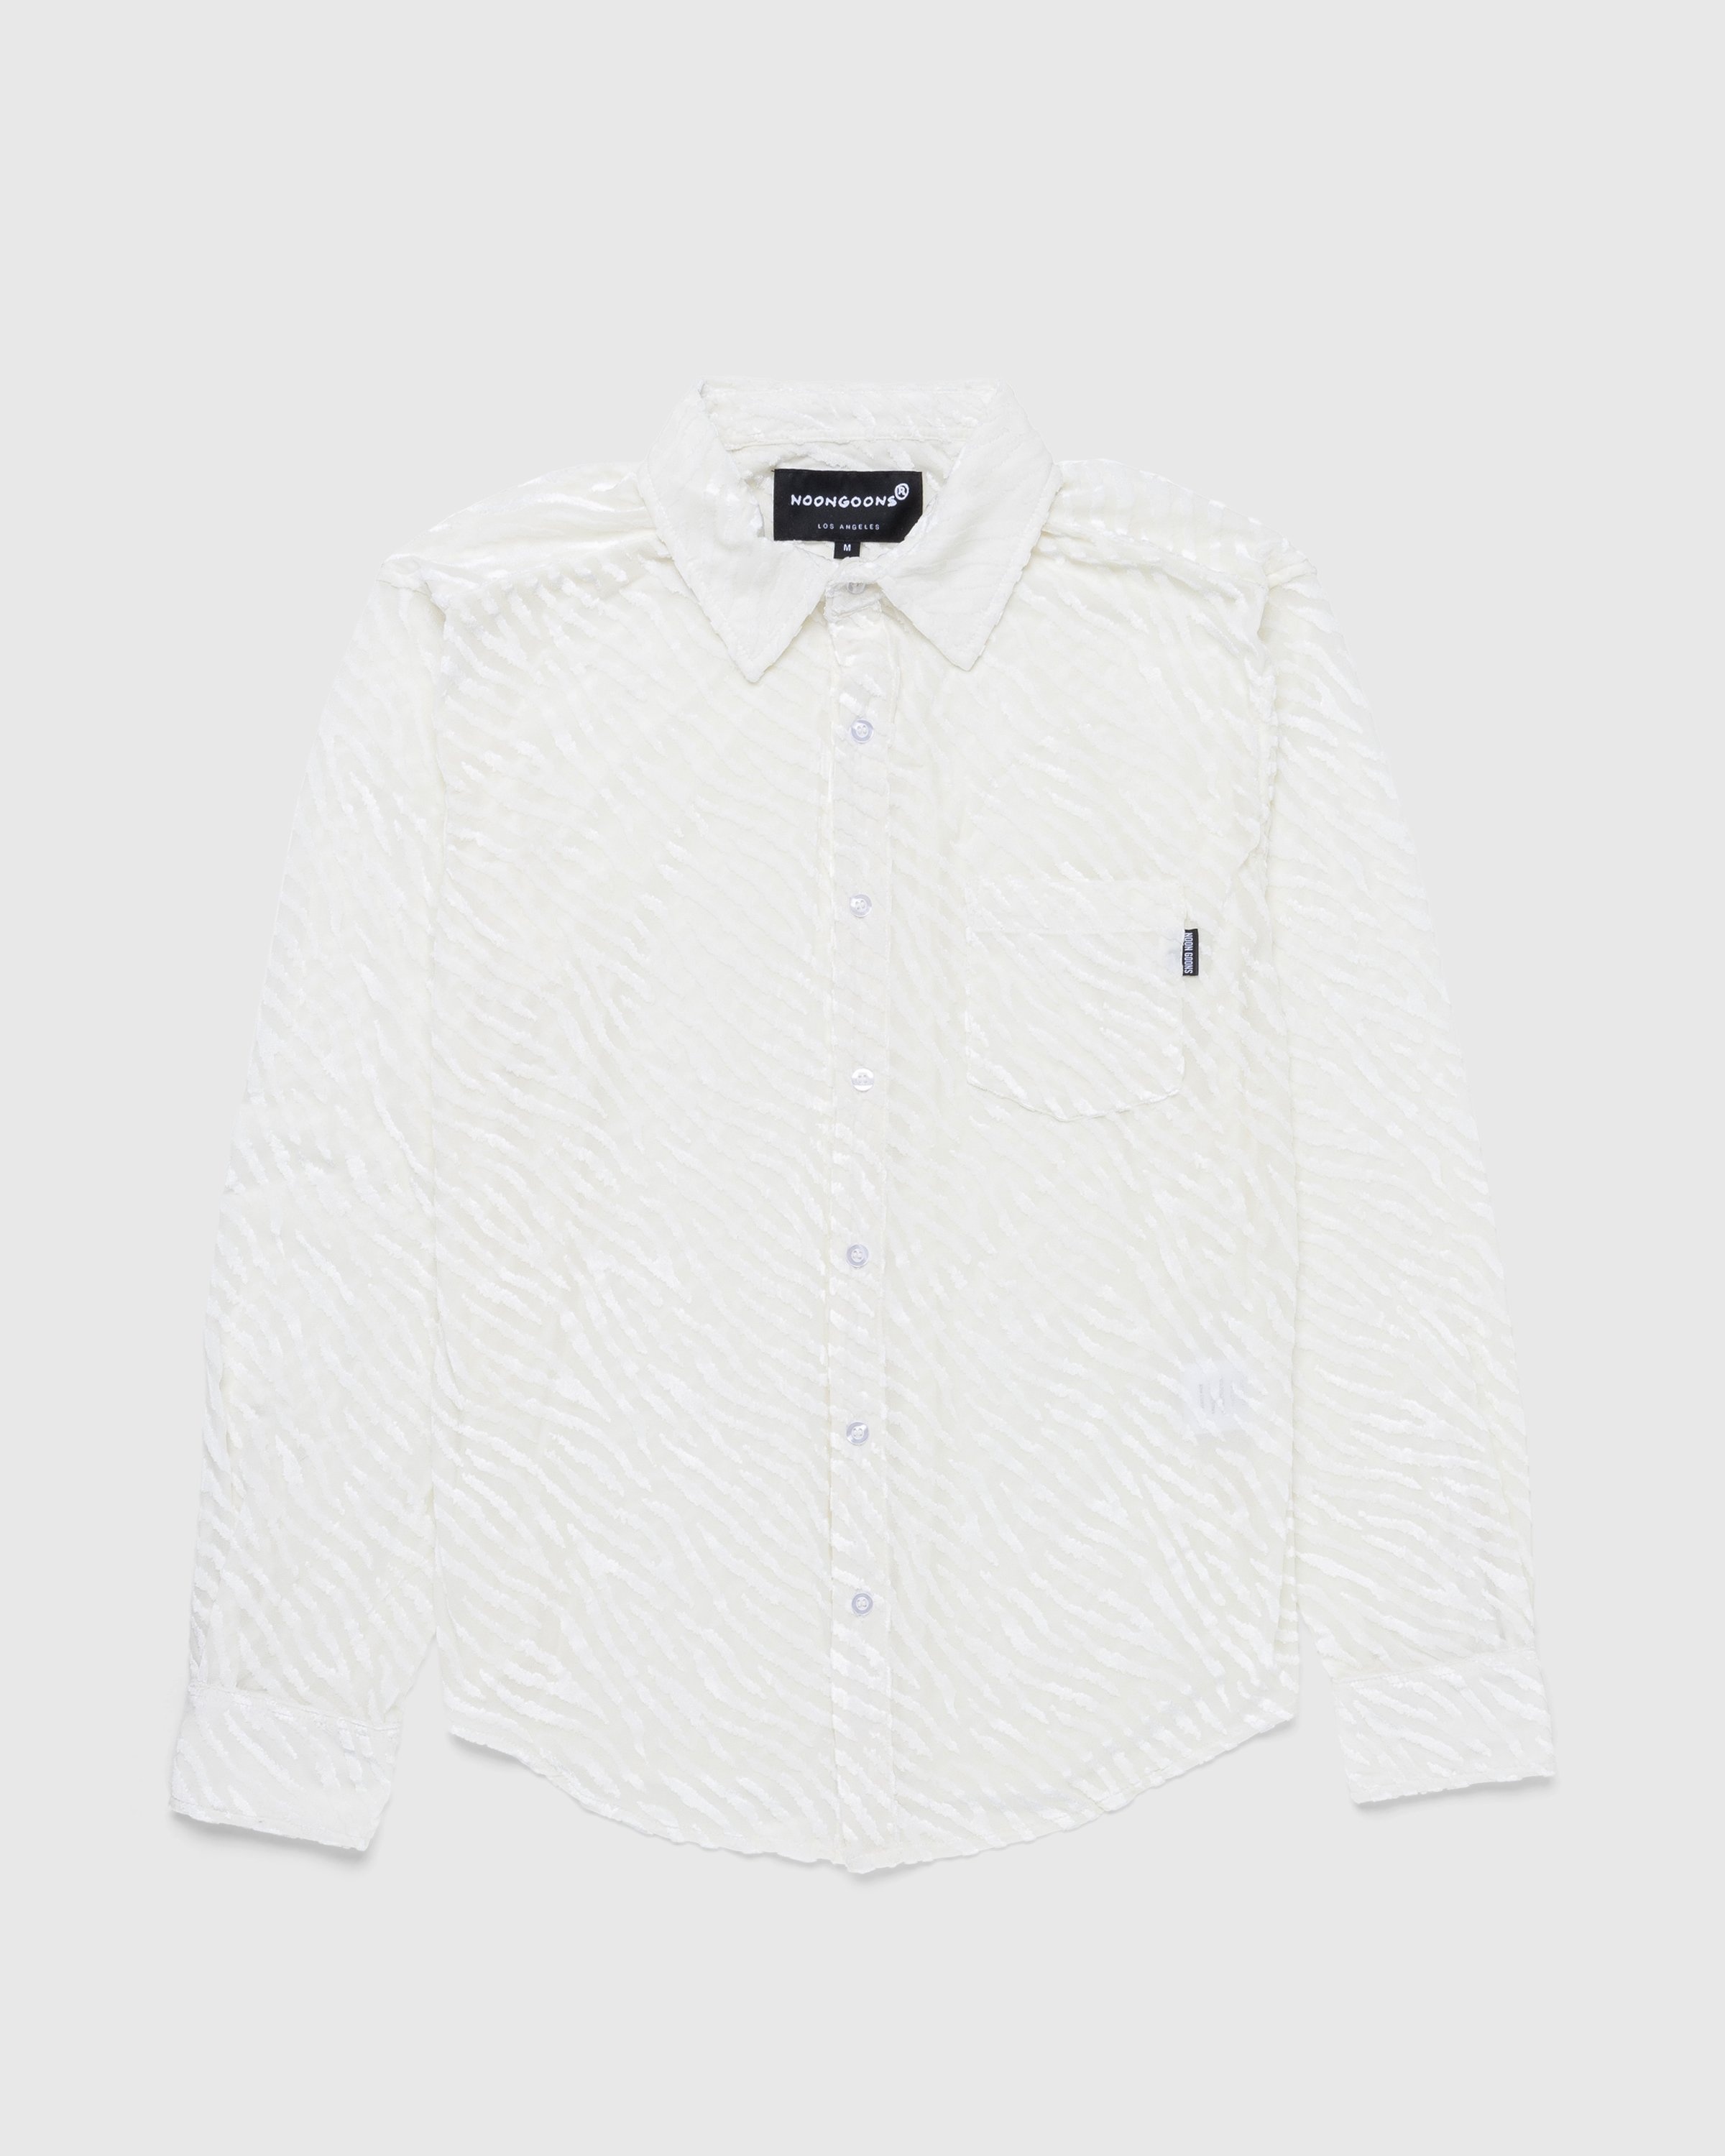 Noon Goons – Tijuana Tiger Shirt White | Highsnobiety Shop